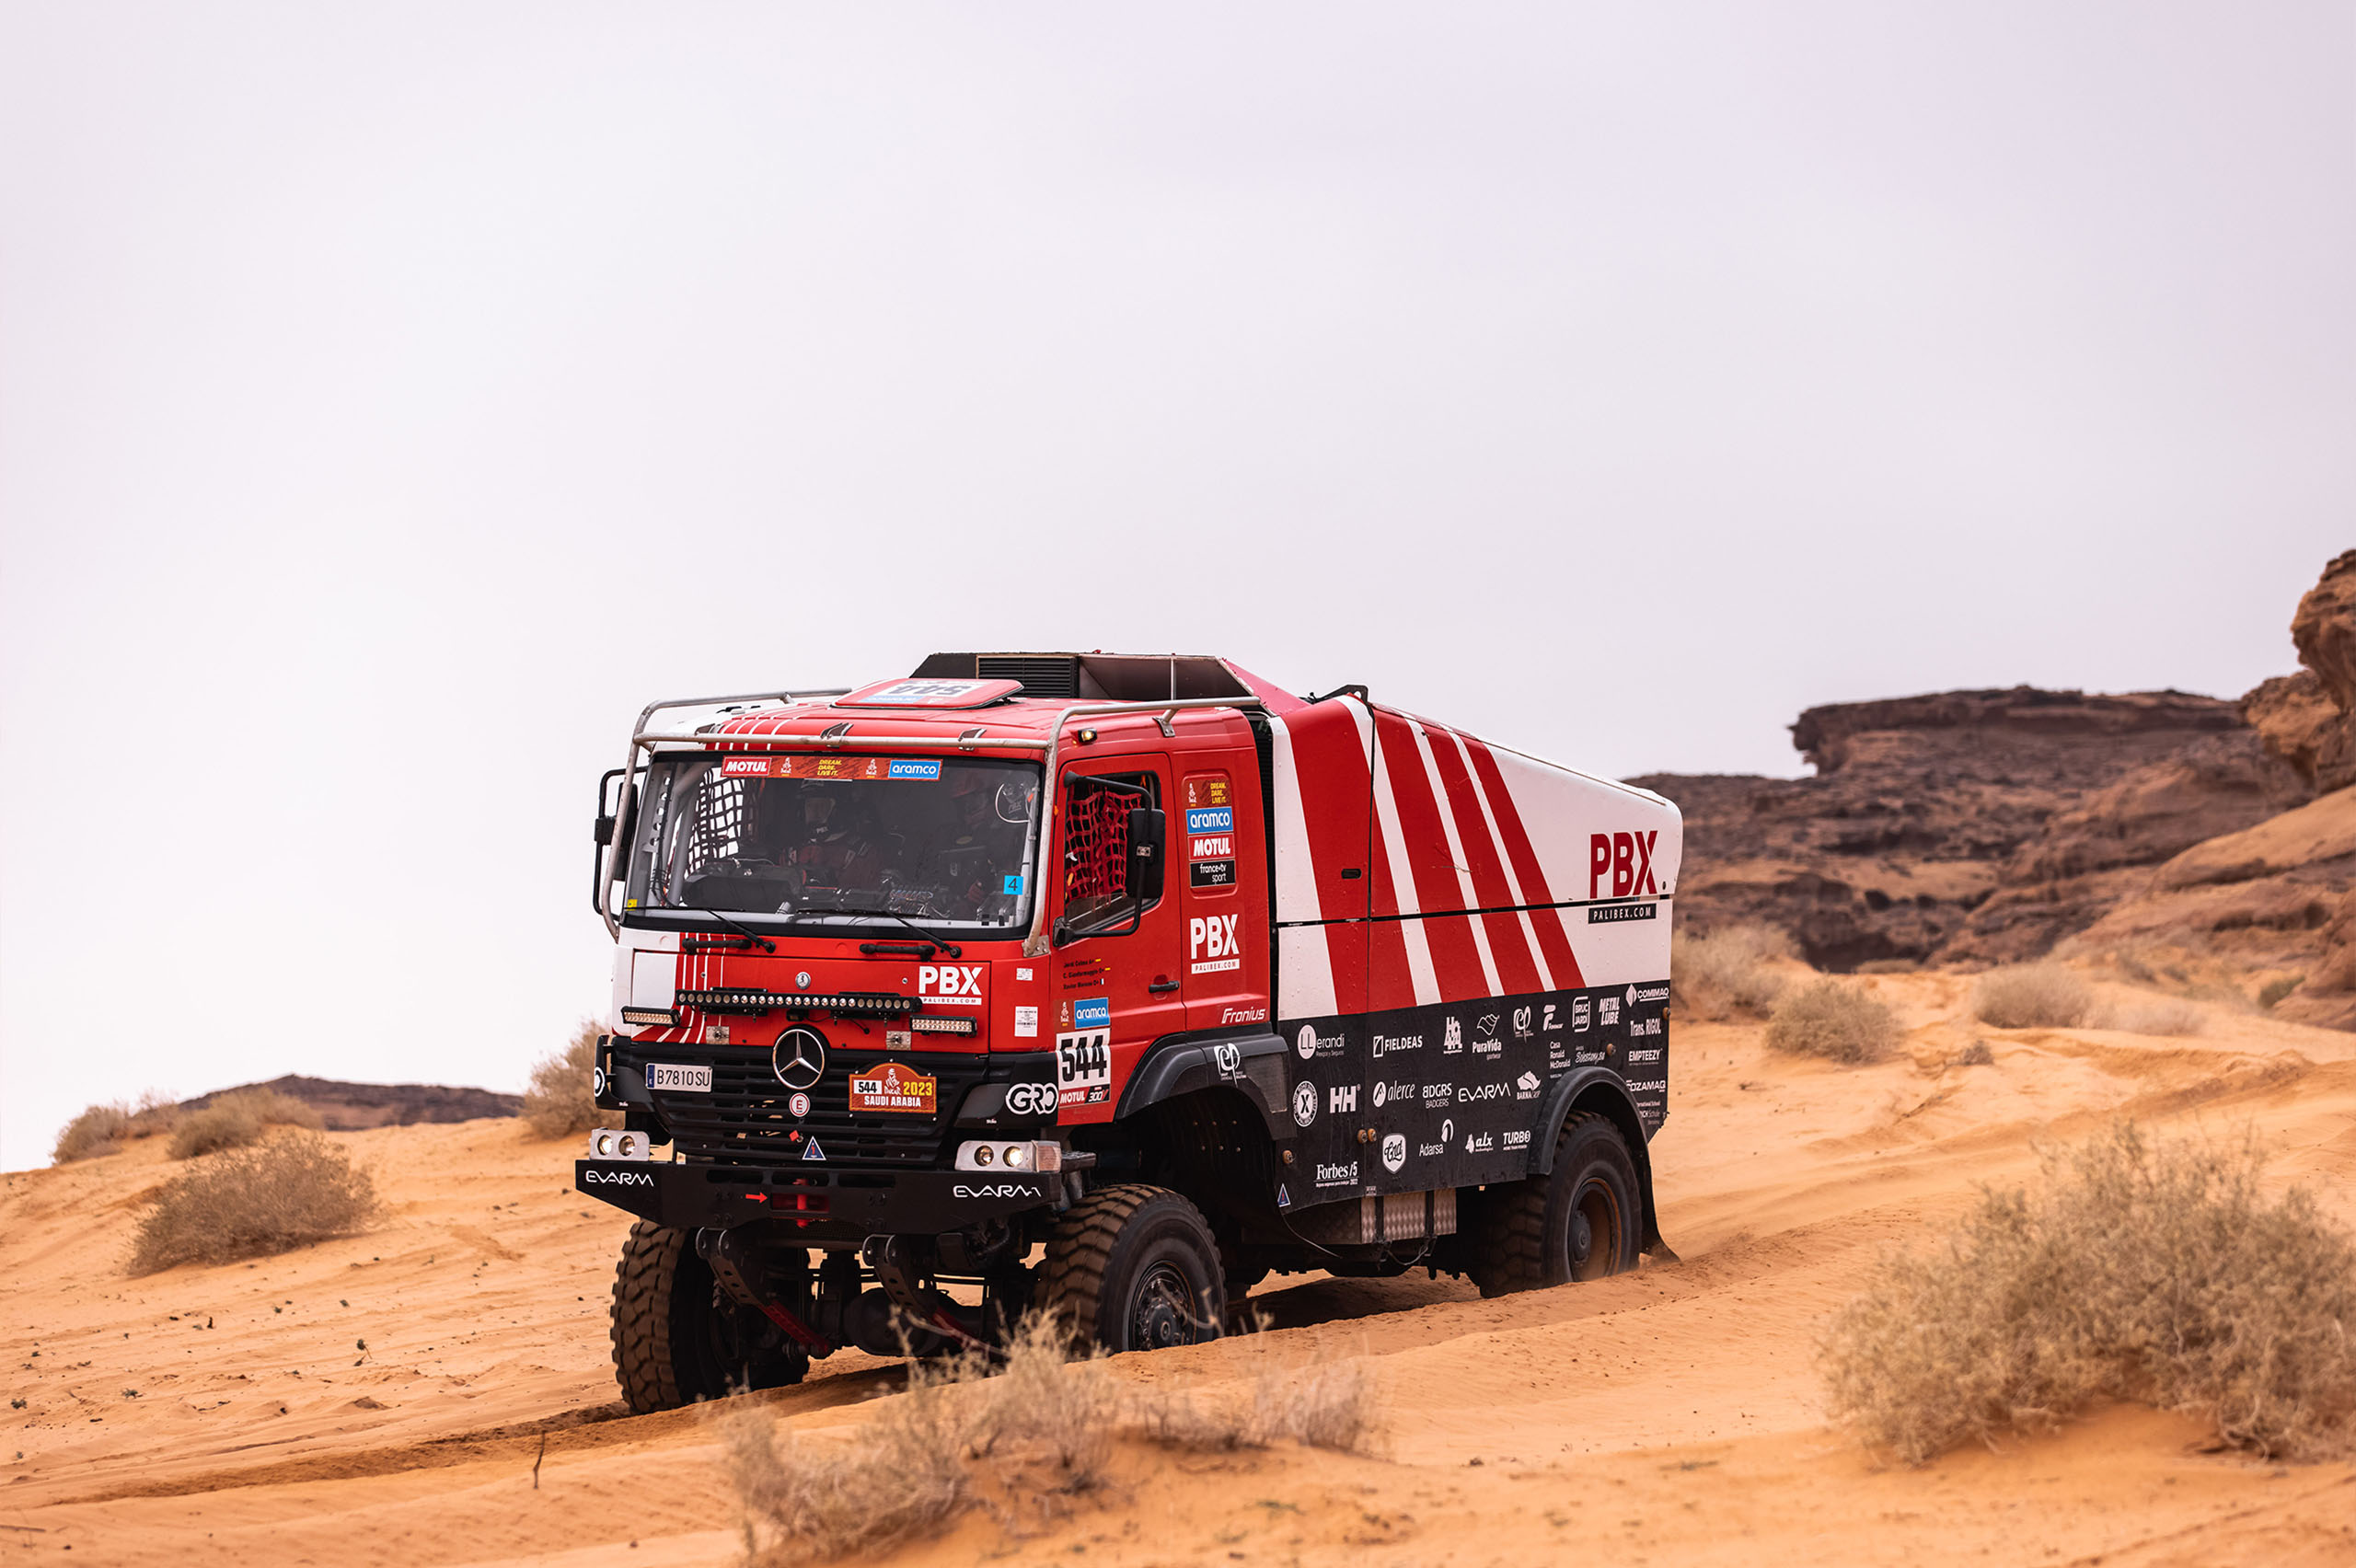 Equipo de asistencia - camion dakar - camion dunas desierto - pbx dakar team - palibex